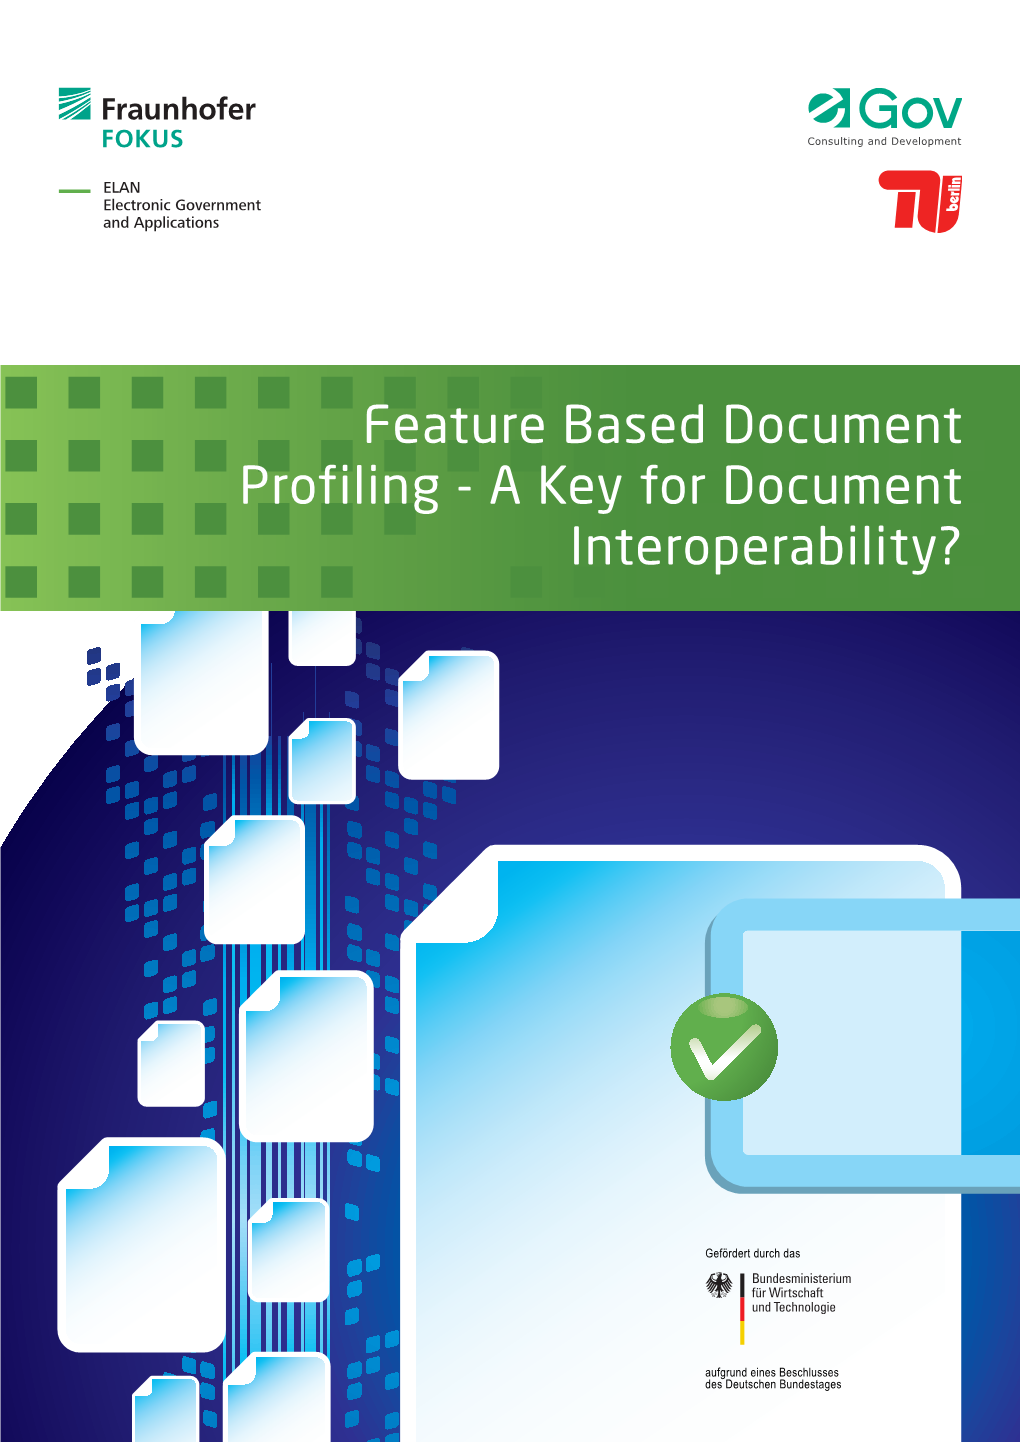 A Key for Document Interoperability?